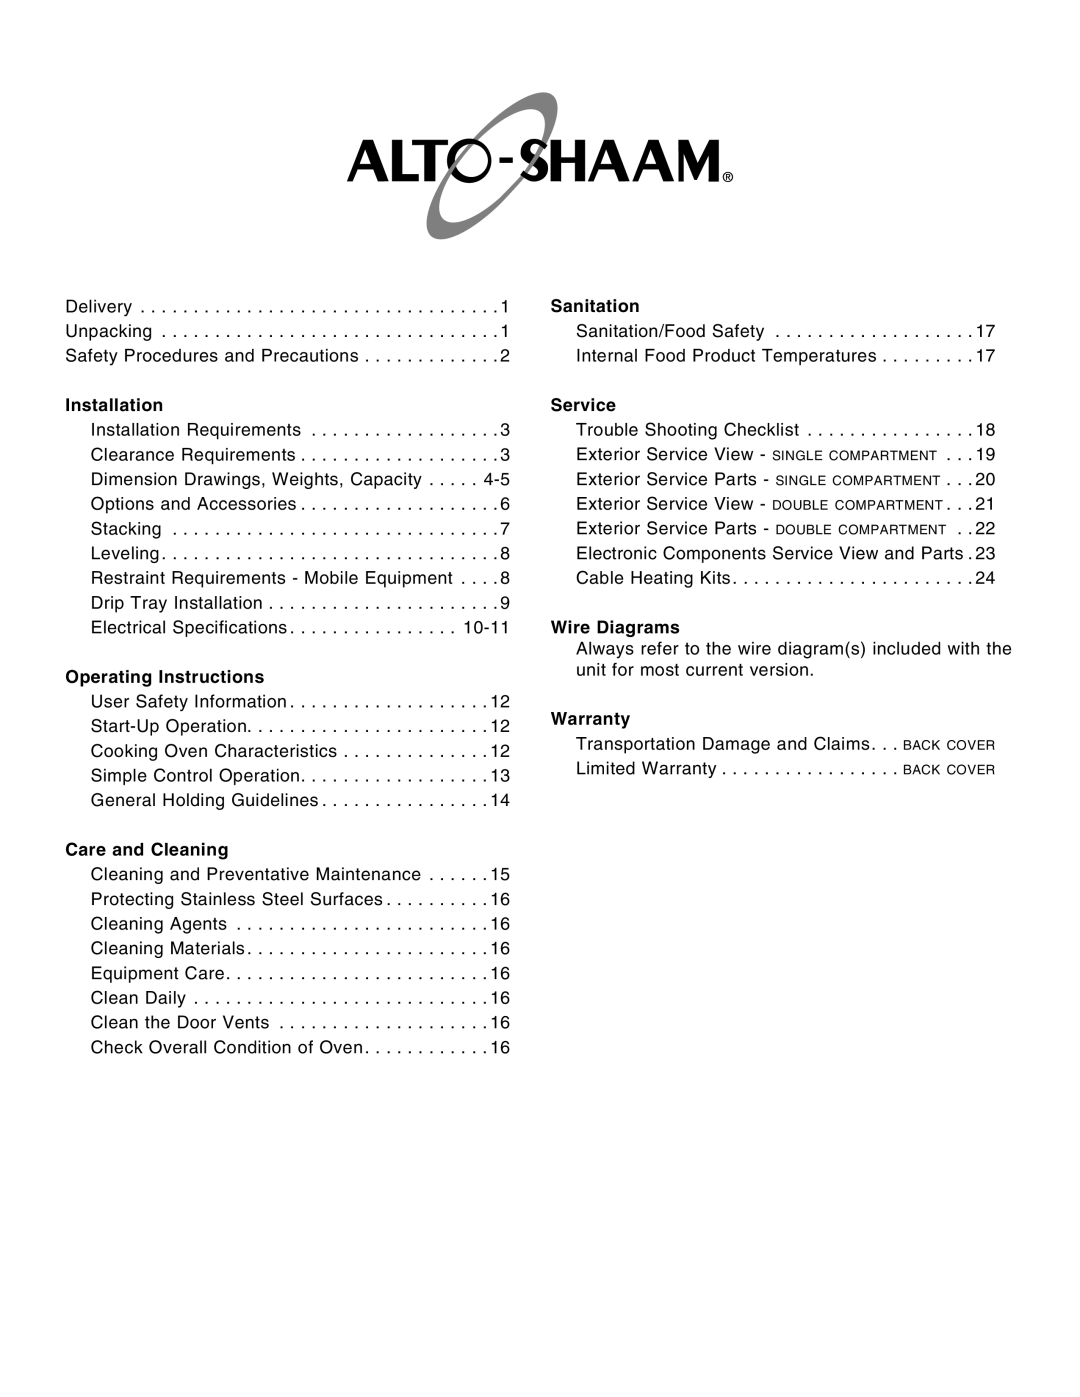 Alto-Shaam 1000-SK/II, 1767-SK manual Sanitation, Installation, Service, Wire Diagrams, Operating Instructions, Warranty 